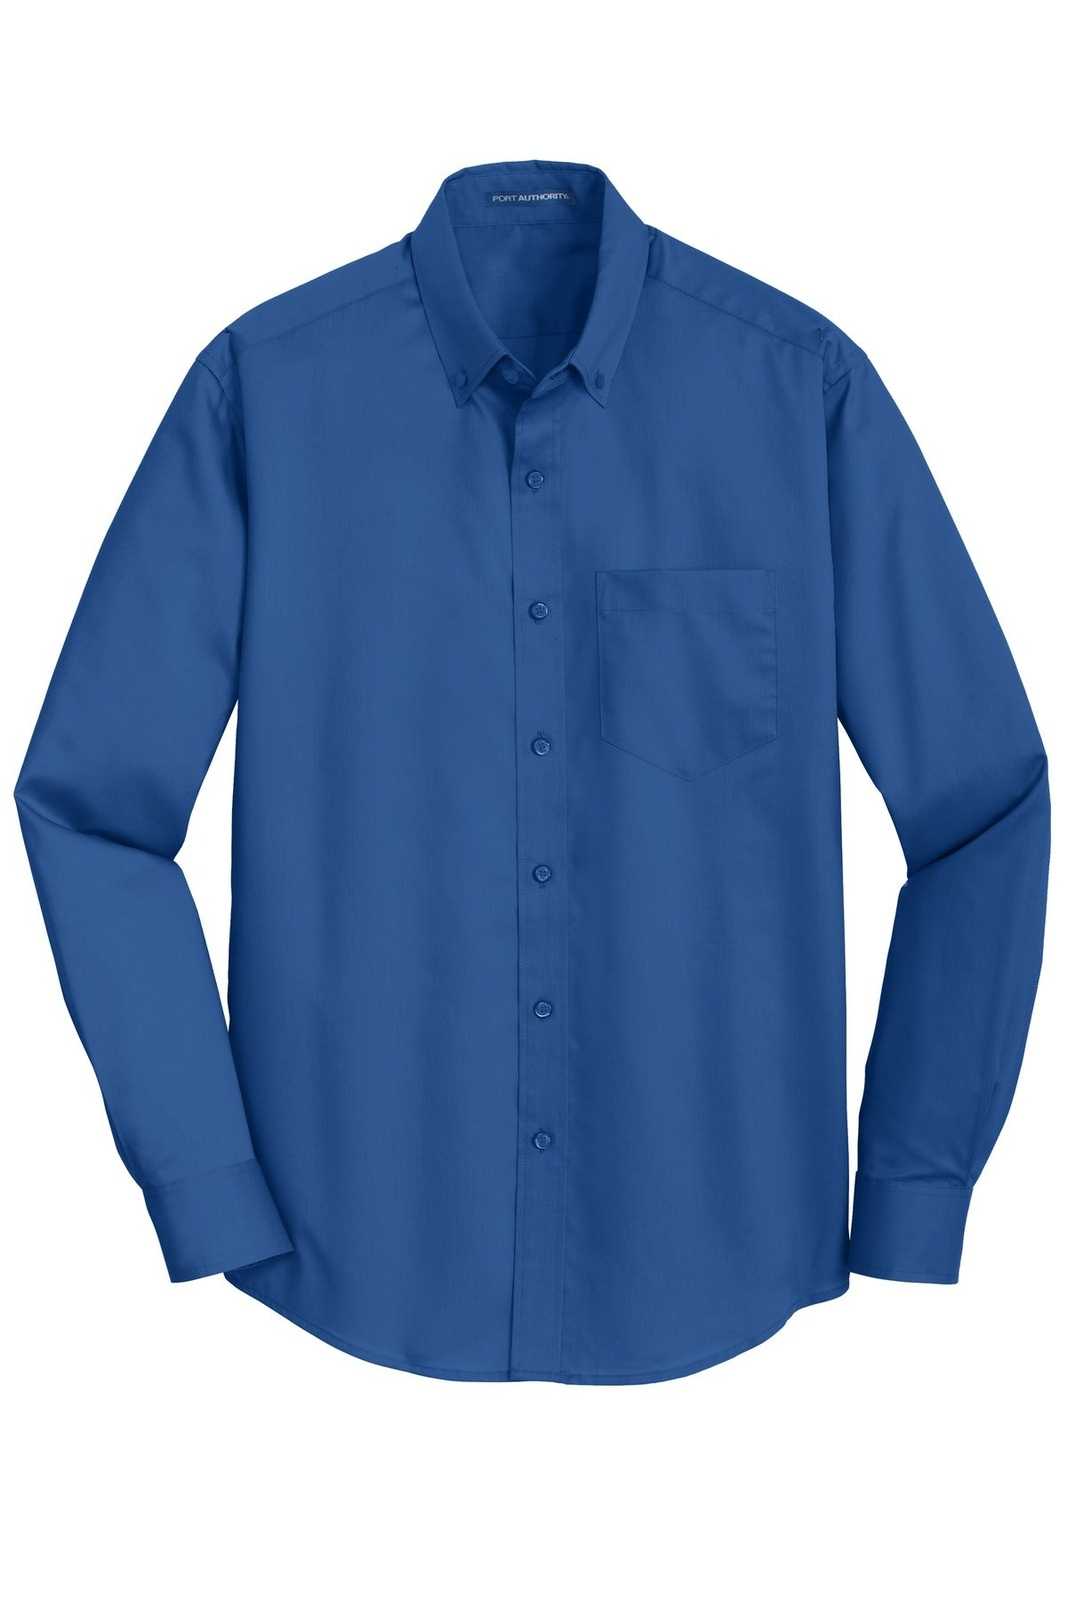 Port Authority S663 Superpro Twill Shirt - True Blue - HIT a Double - 5